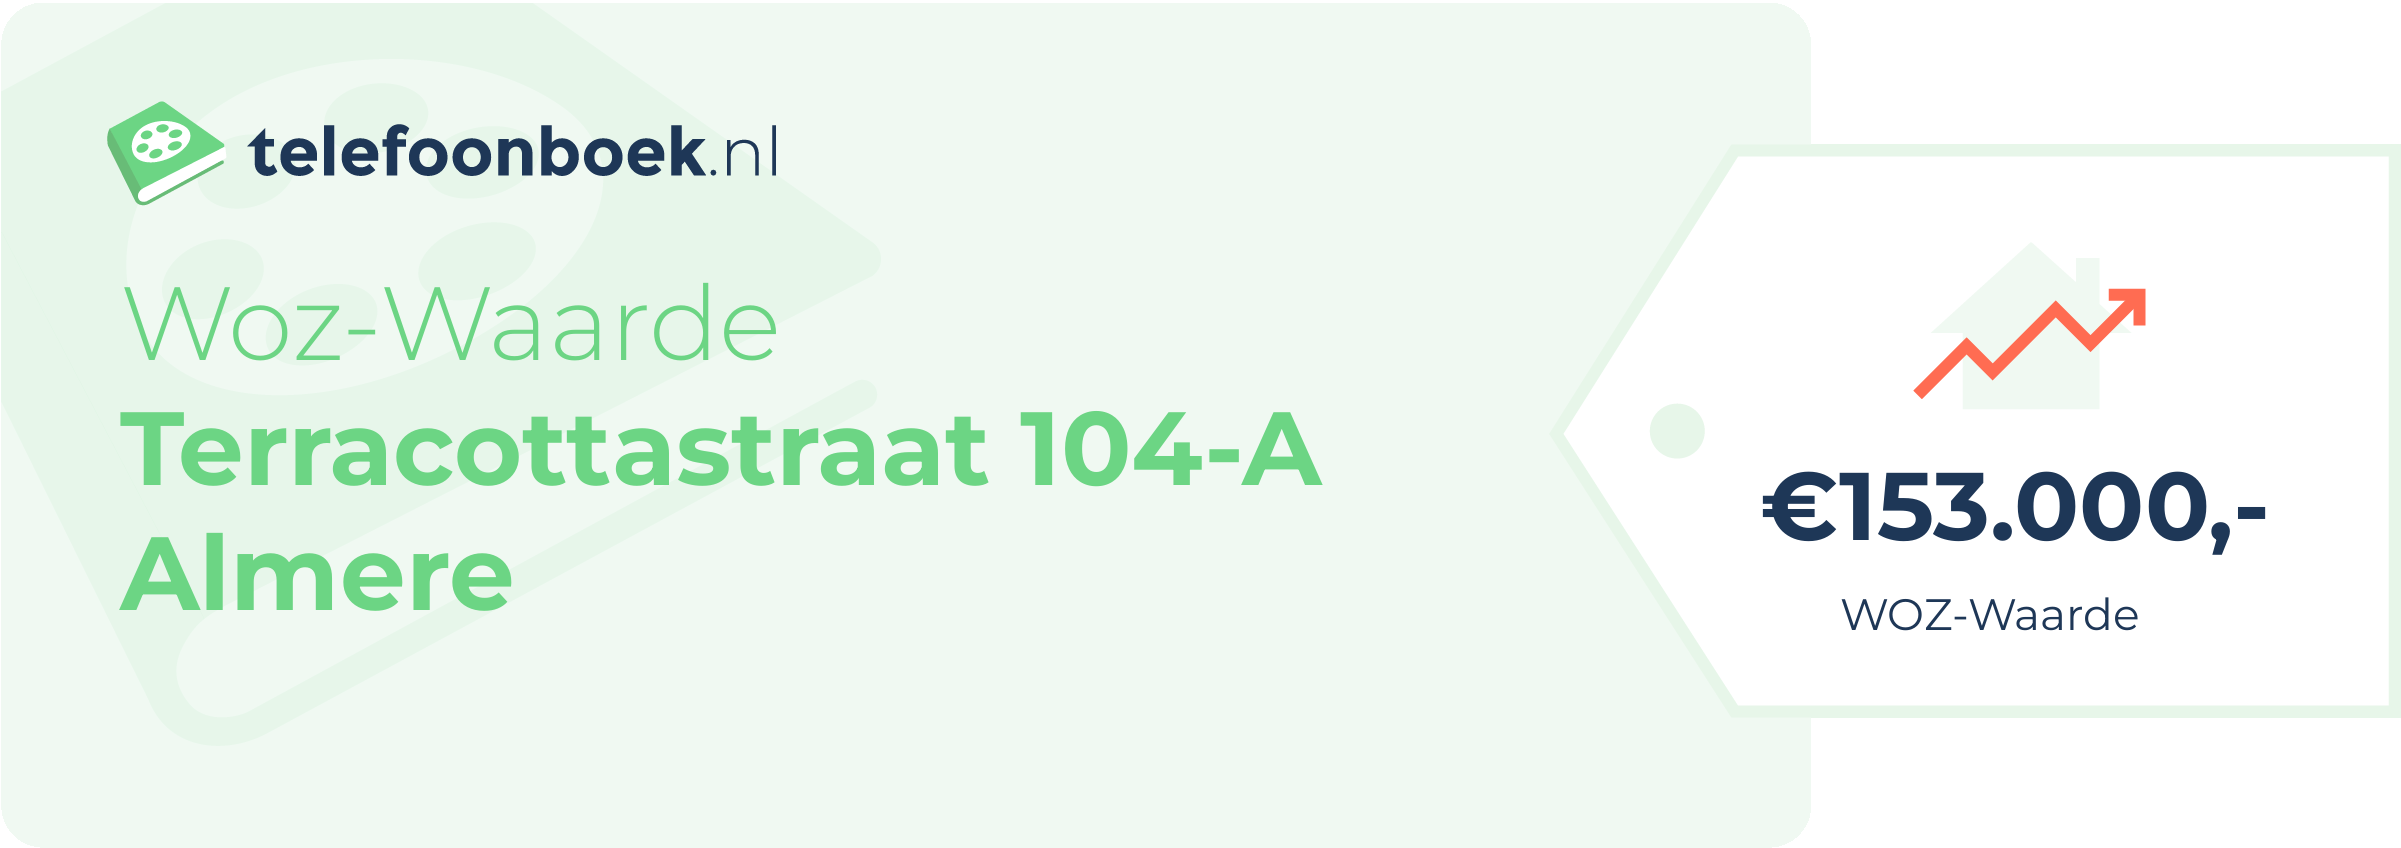 WOZ-waarde Terracottastraat 104-A Almere